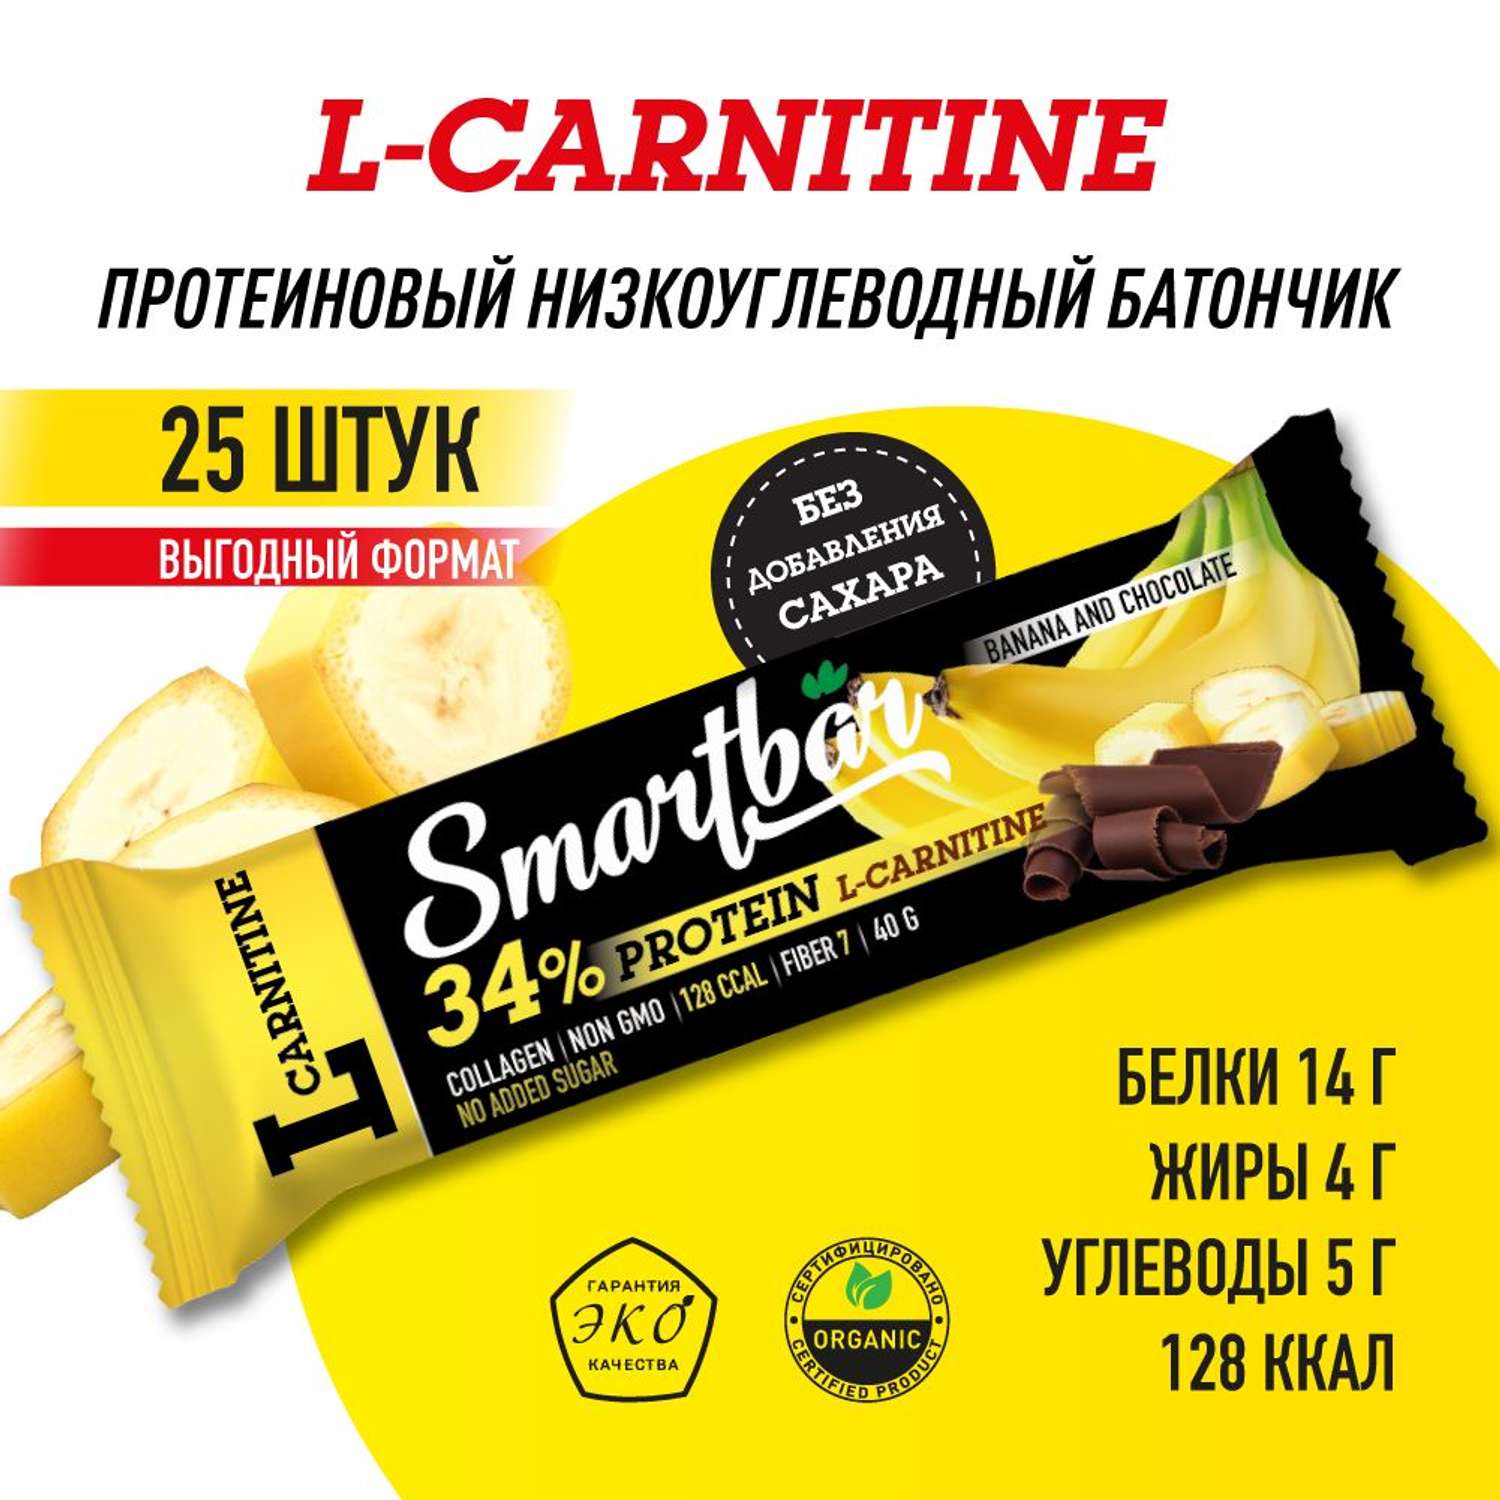 Протеиновые батончики Smartbar Банан-шоколад с Л-карнитином 25 шт.х 40г - фото 2